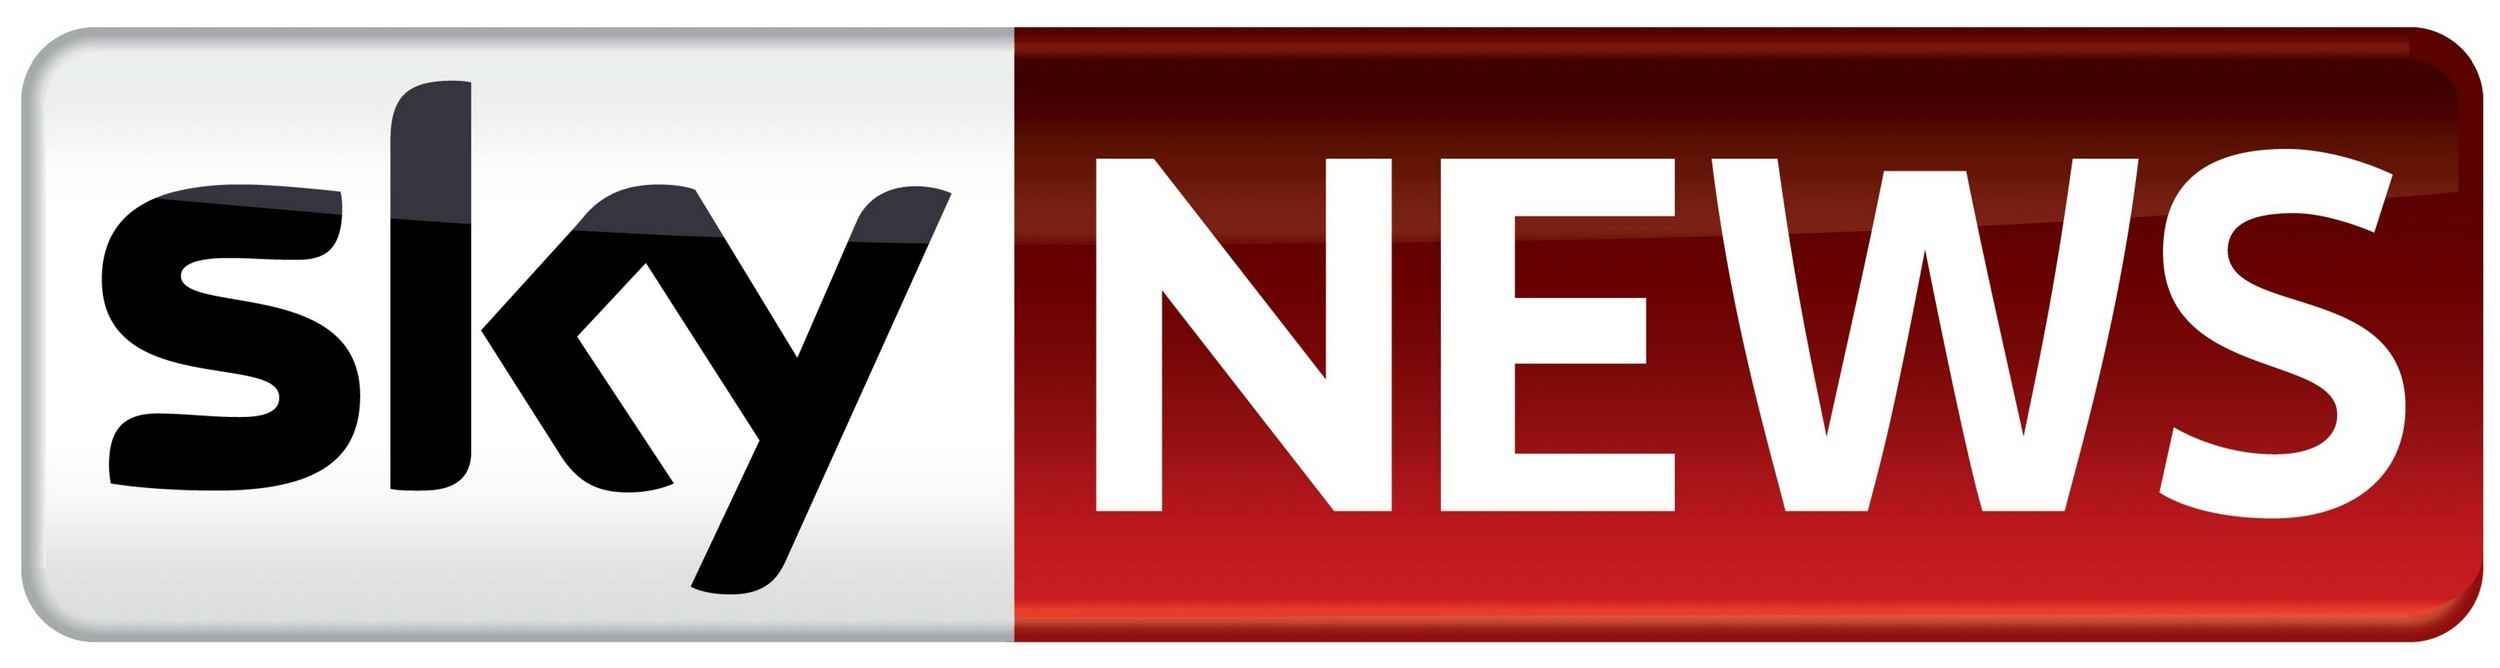 Image result for sky news logo